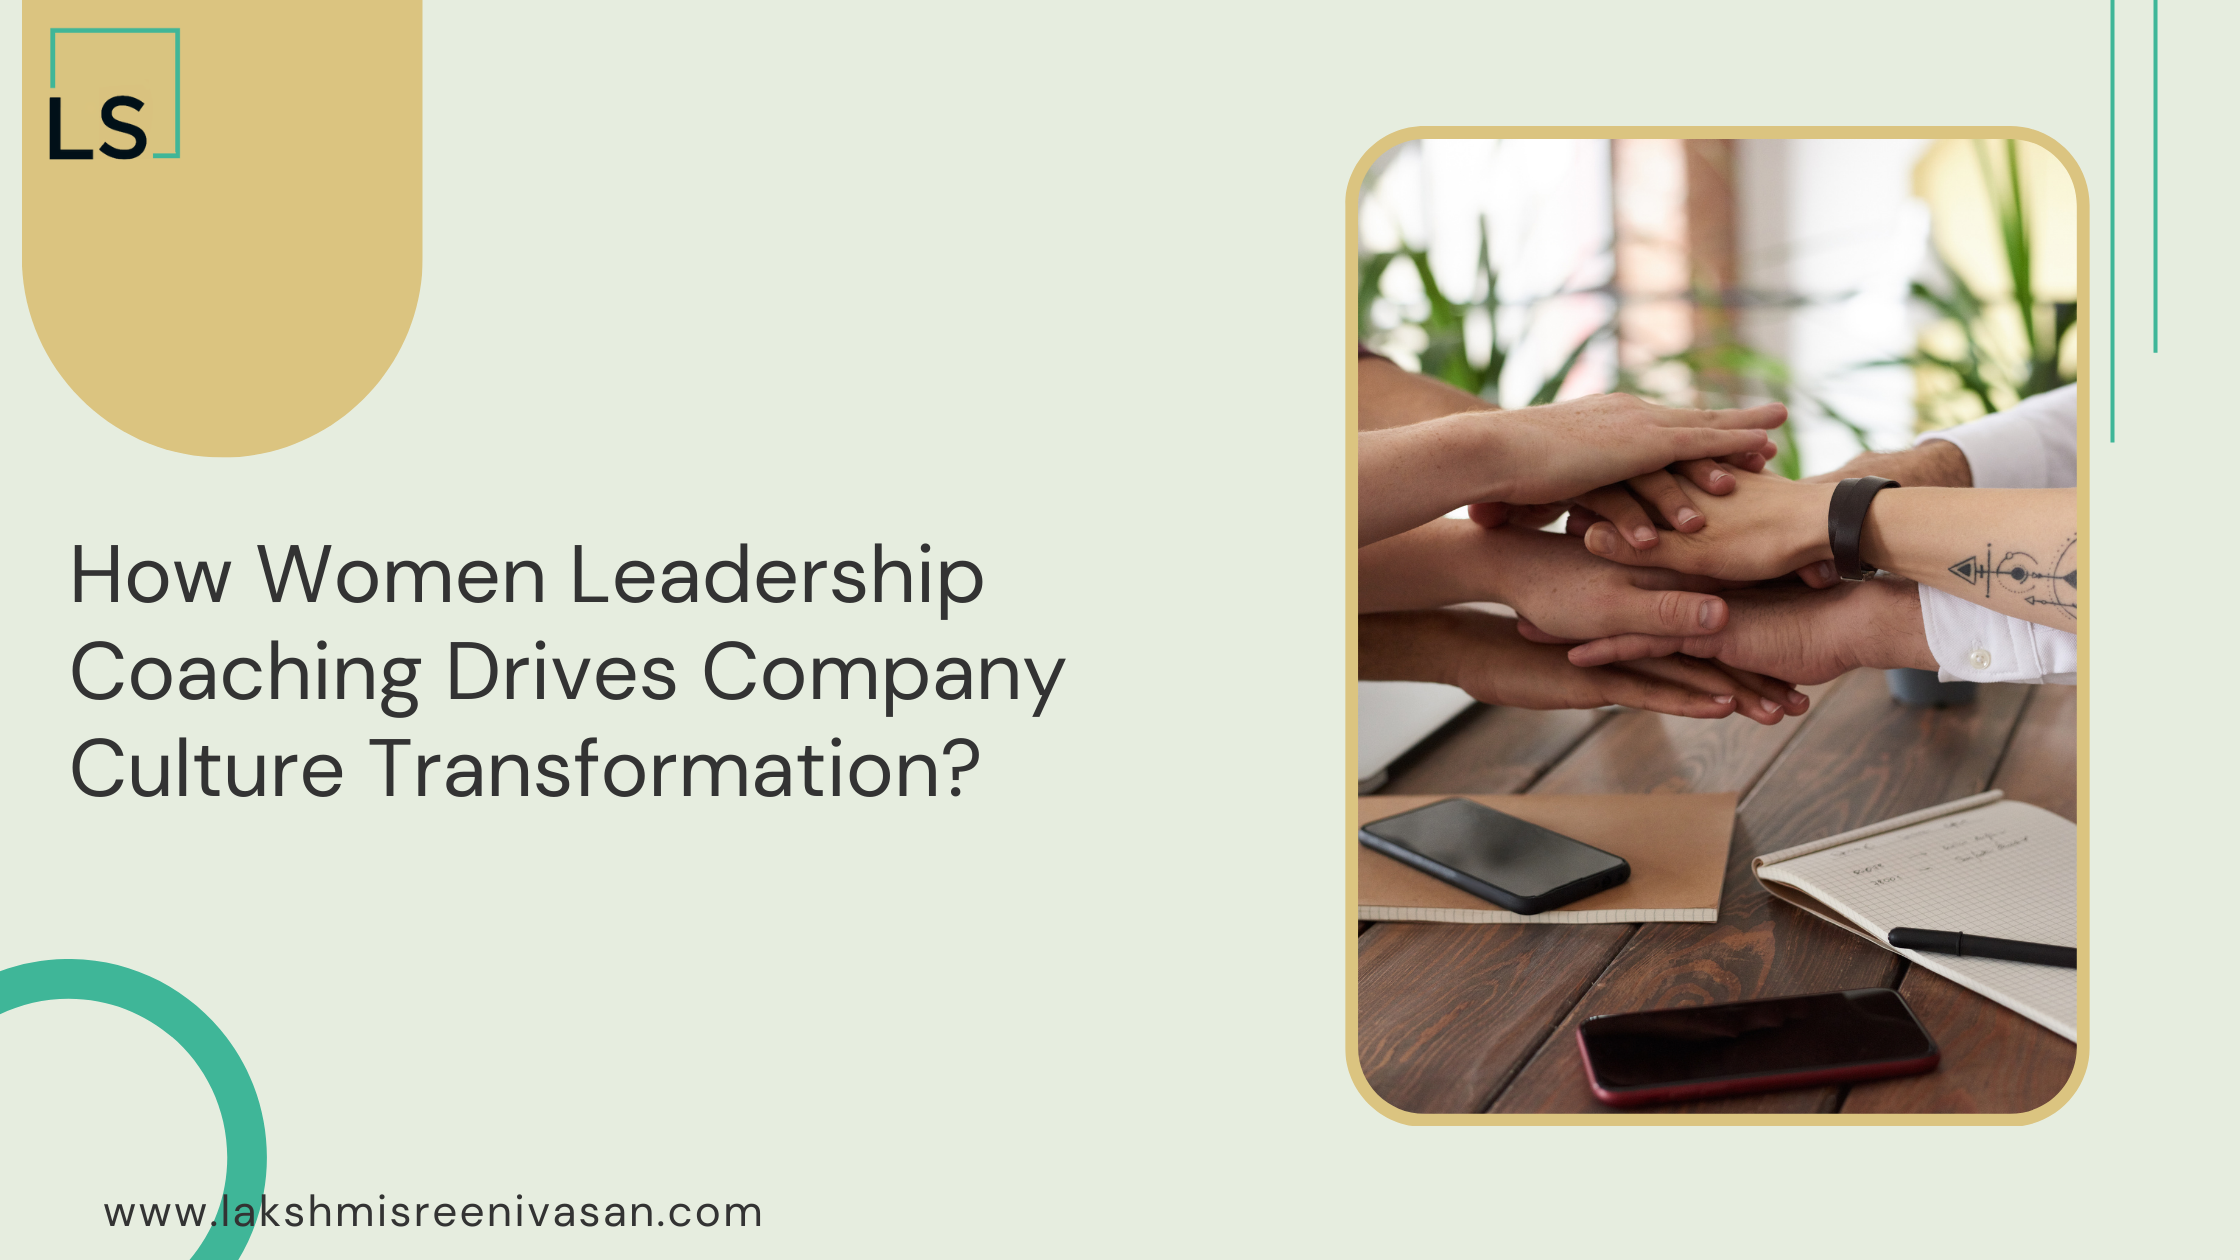 How Women Leadership Coaching Drives Company Culture Transformation